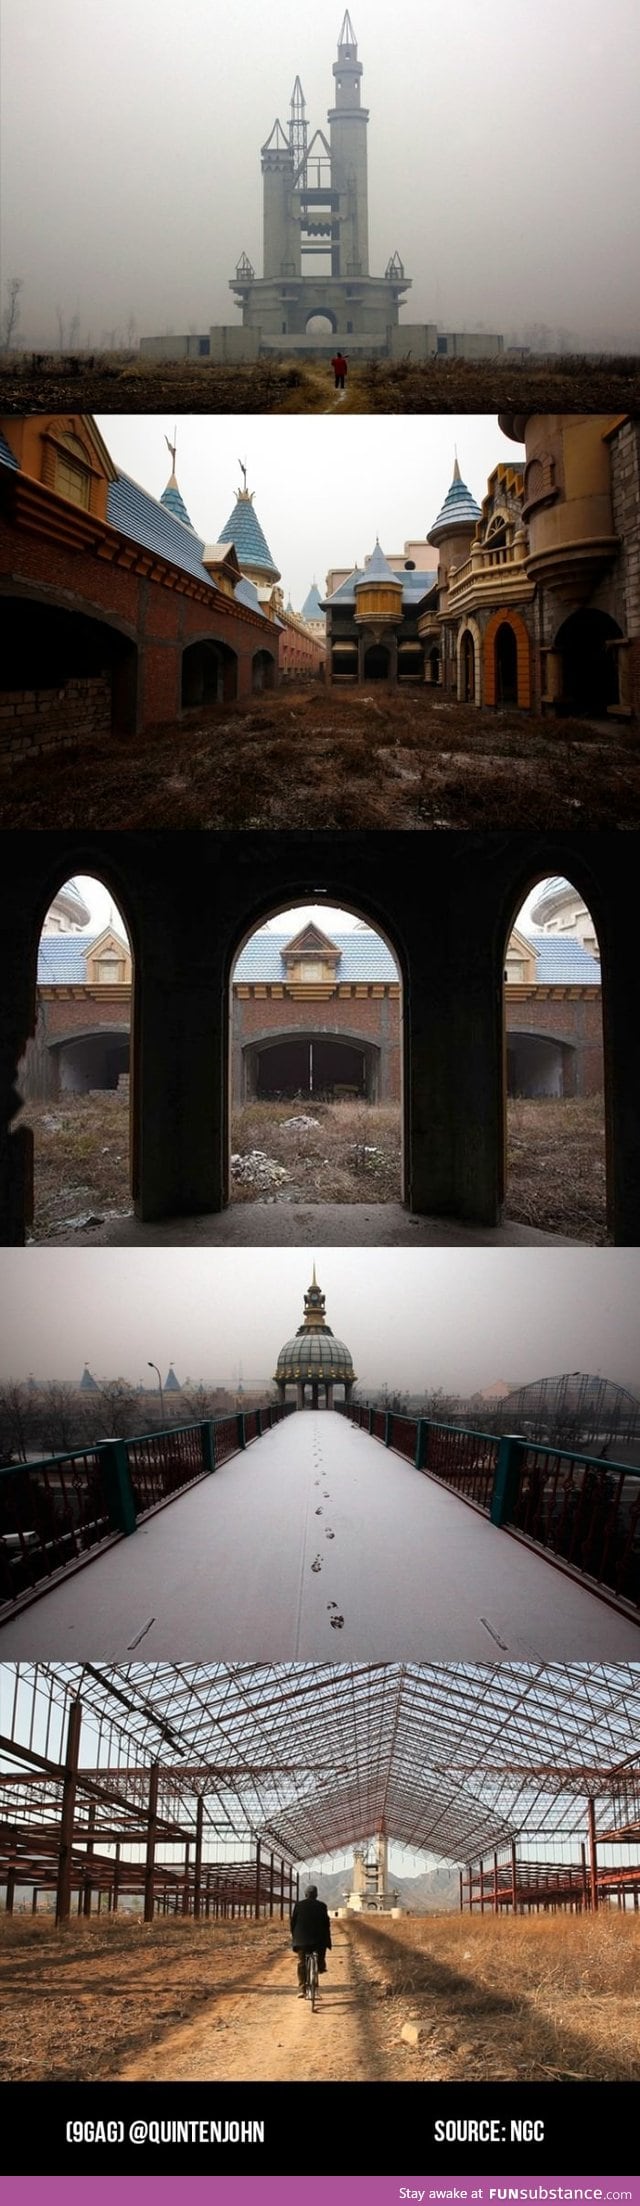 I present to you: China's abandoned Disneyland